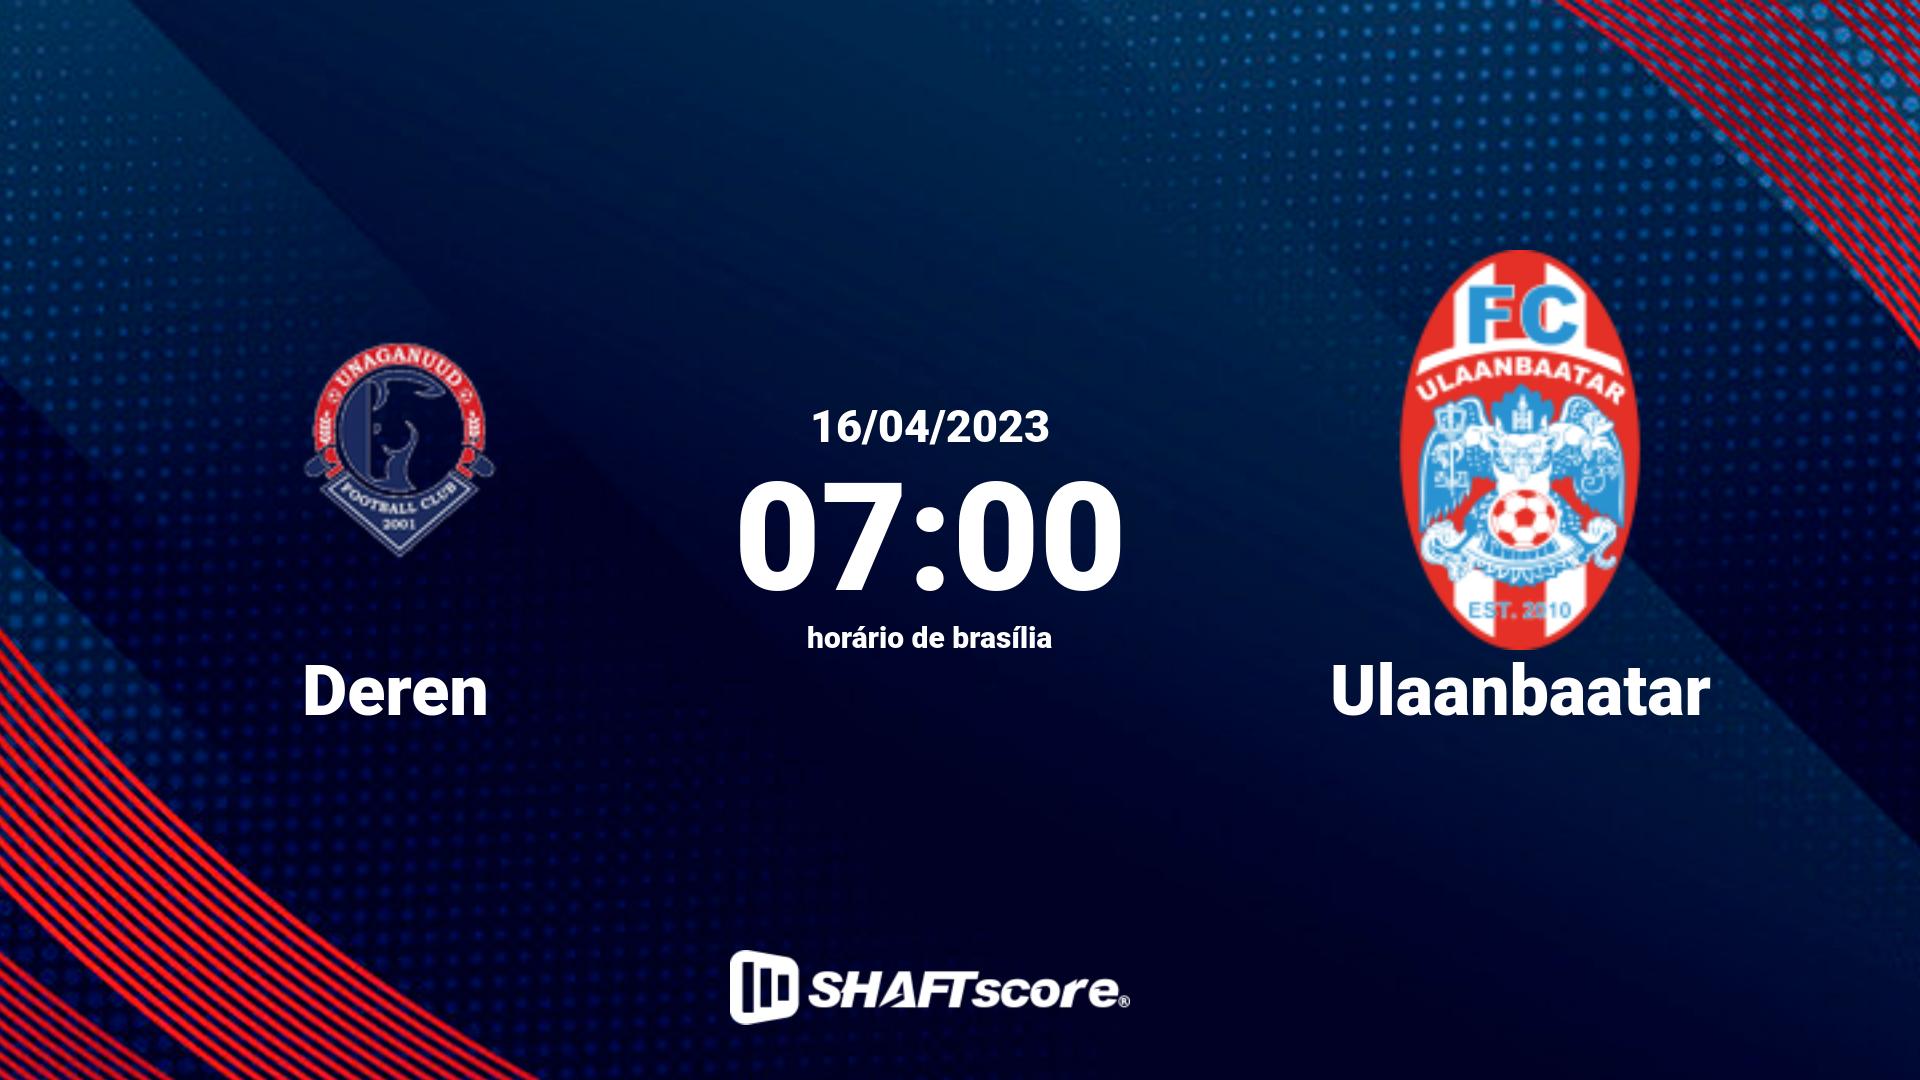 Estatísticas do jogo Deren vs Ulaanbaatar 16.04 07:00